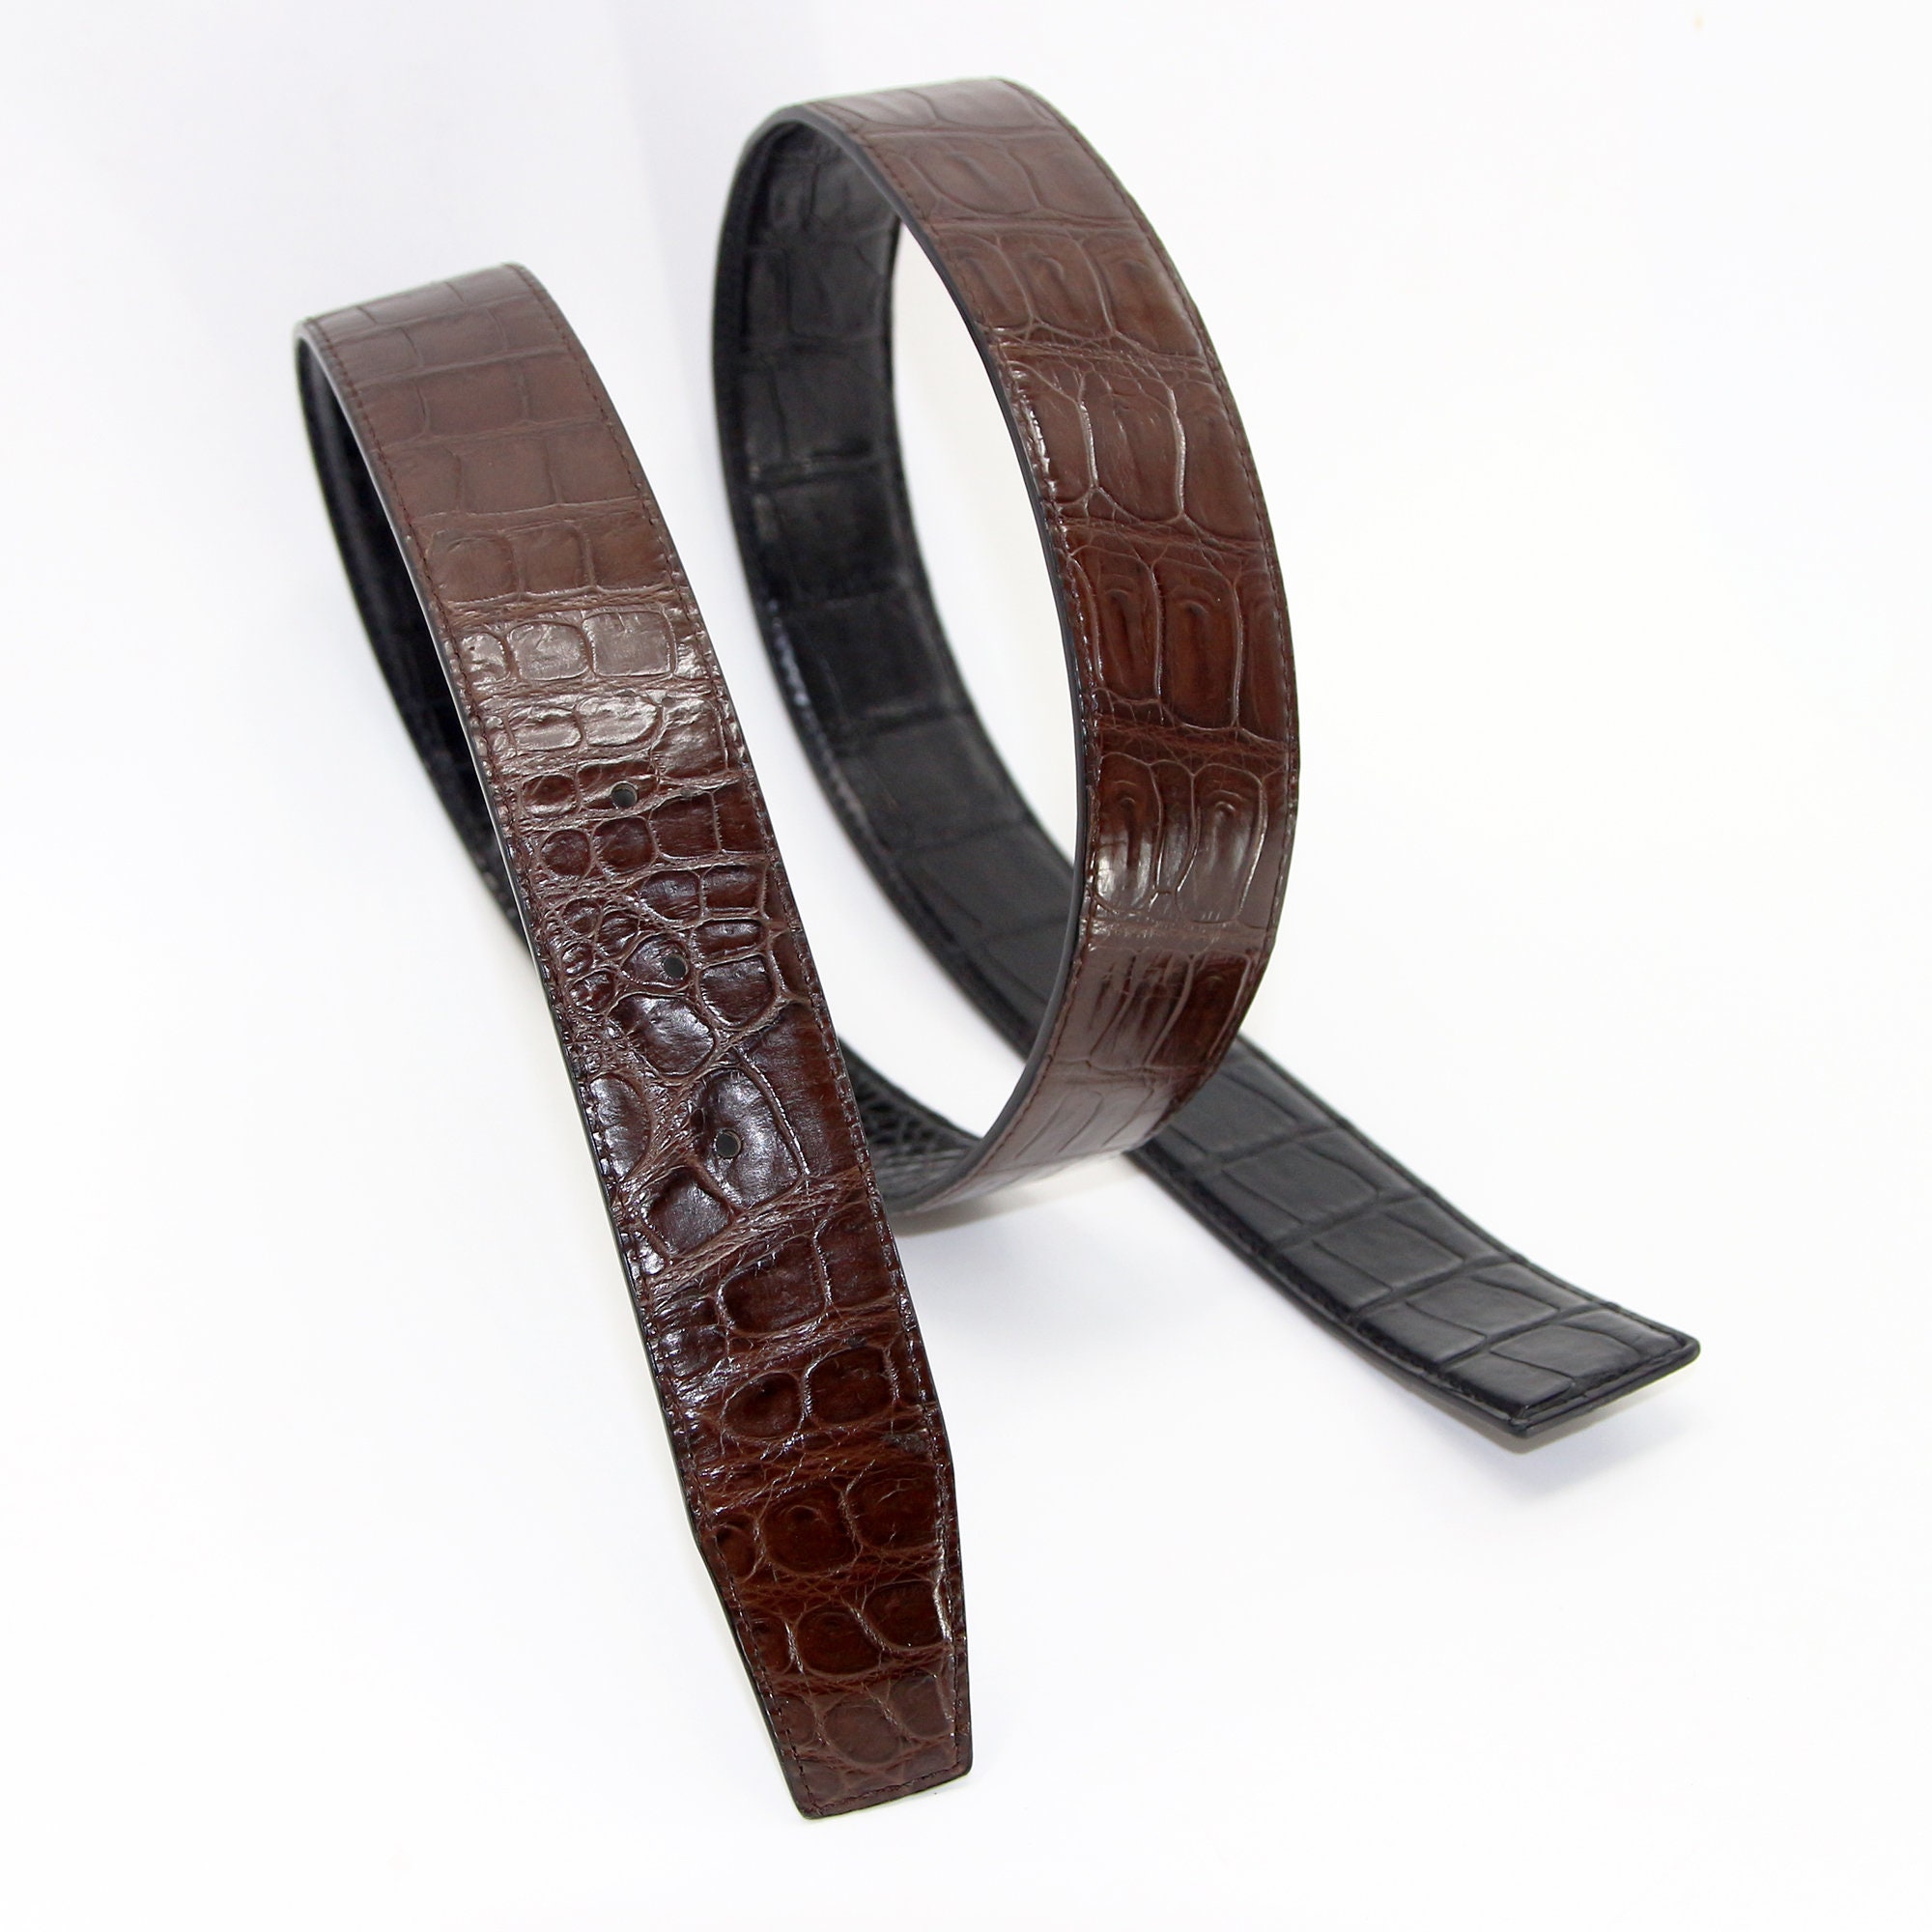 Belt Strap Replacement for SALVATORE FERRAGAMO Buckle Smooth Leather - La  Petite Croisette